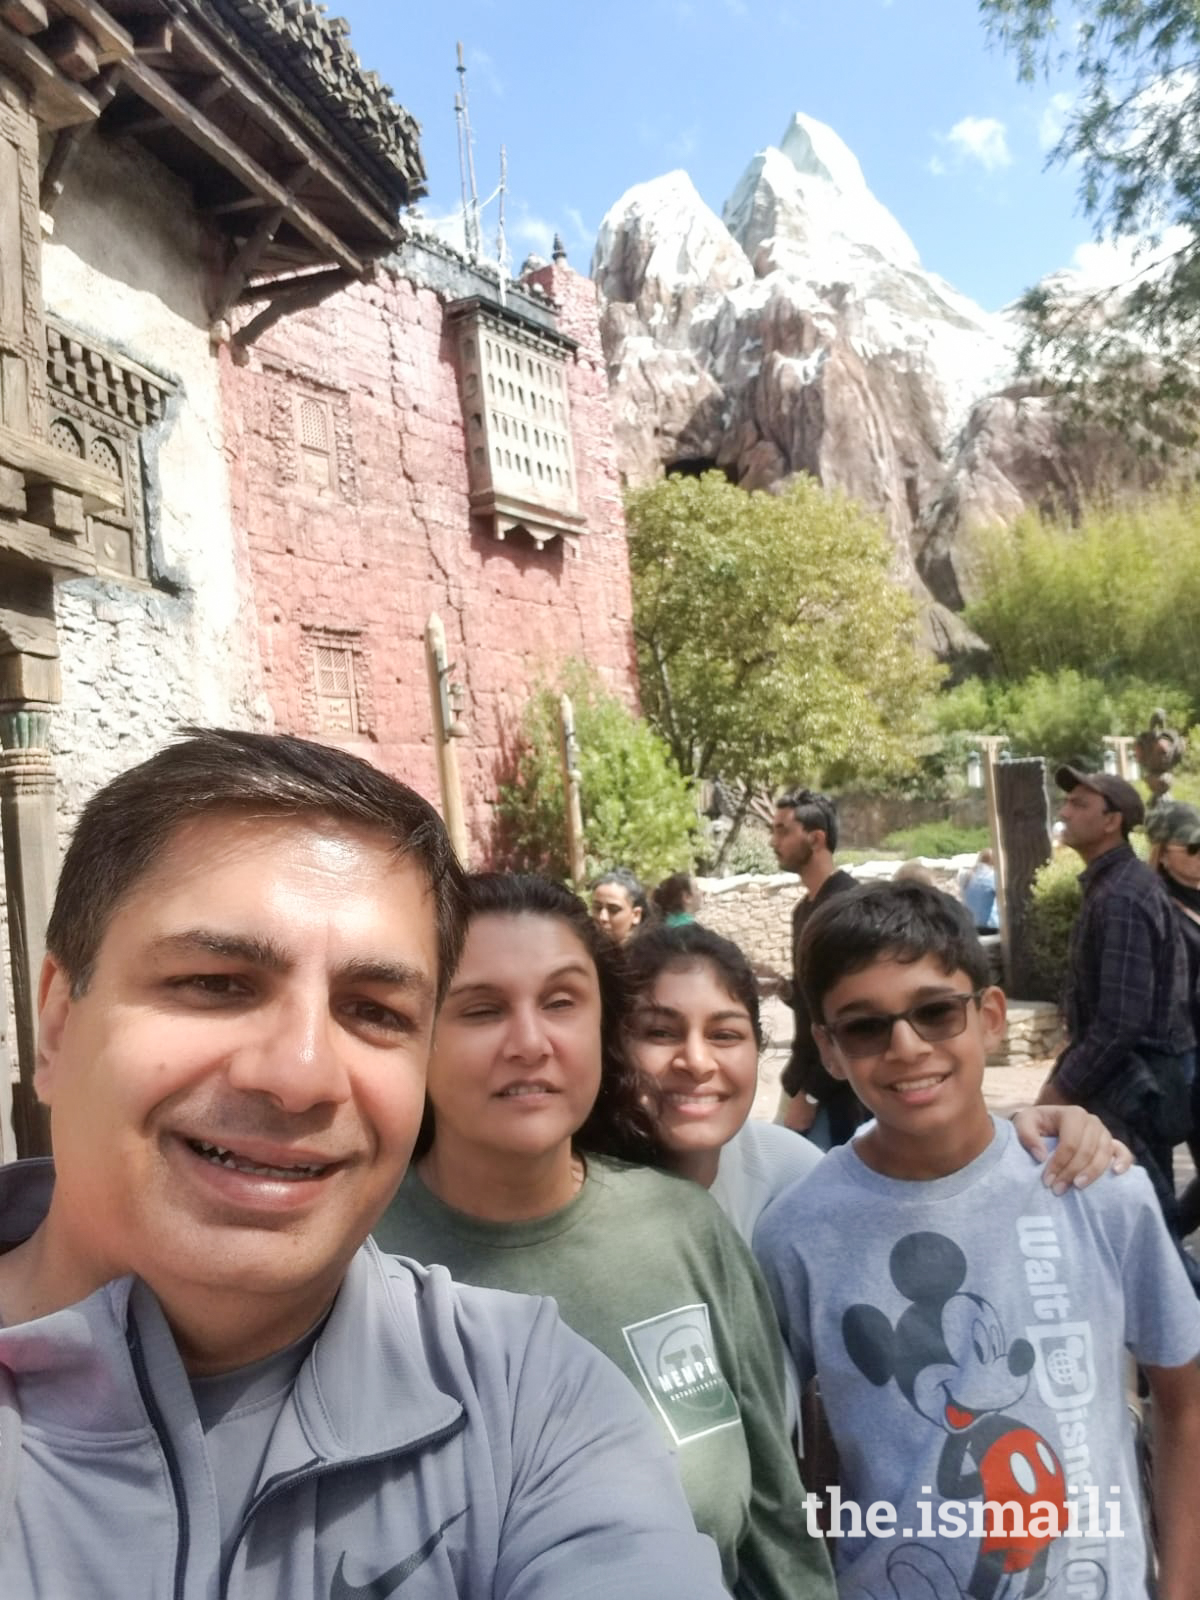 The Esani family at Disney Orlando.